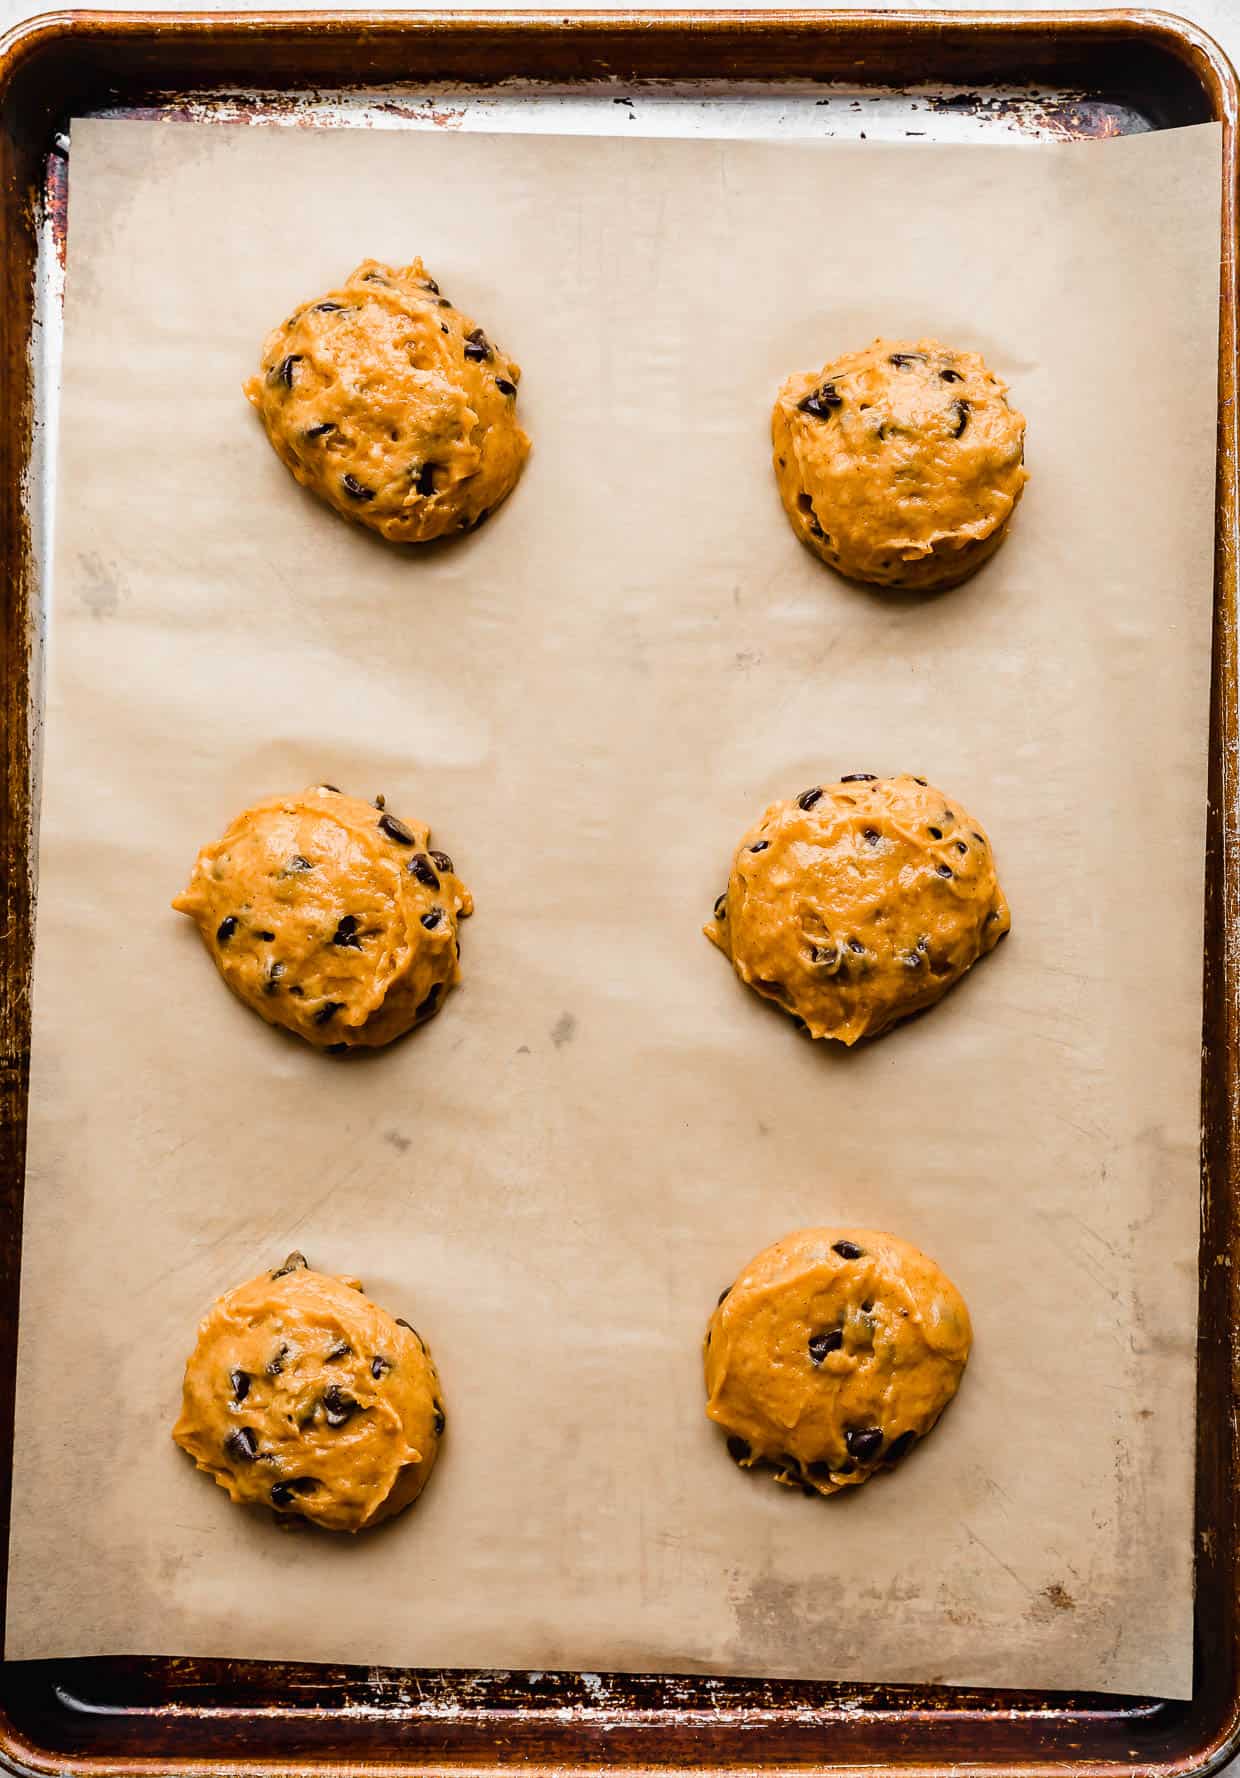 Six balls of Crumbl Pumpkin Chocolate Chip Cookie dough batter on a tan parchment lined baking sheet.